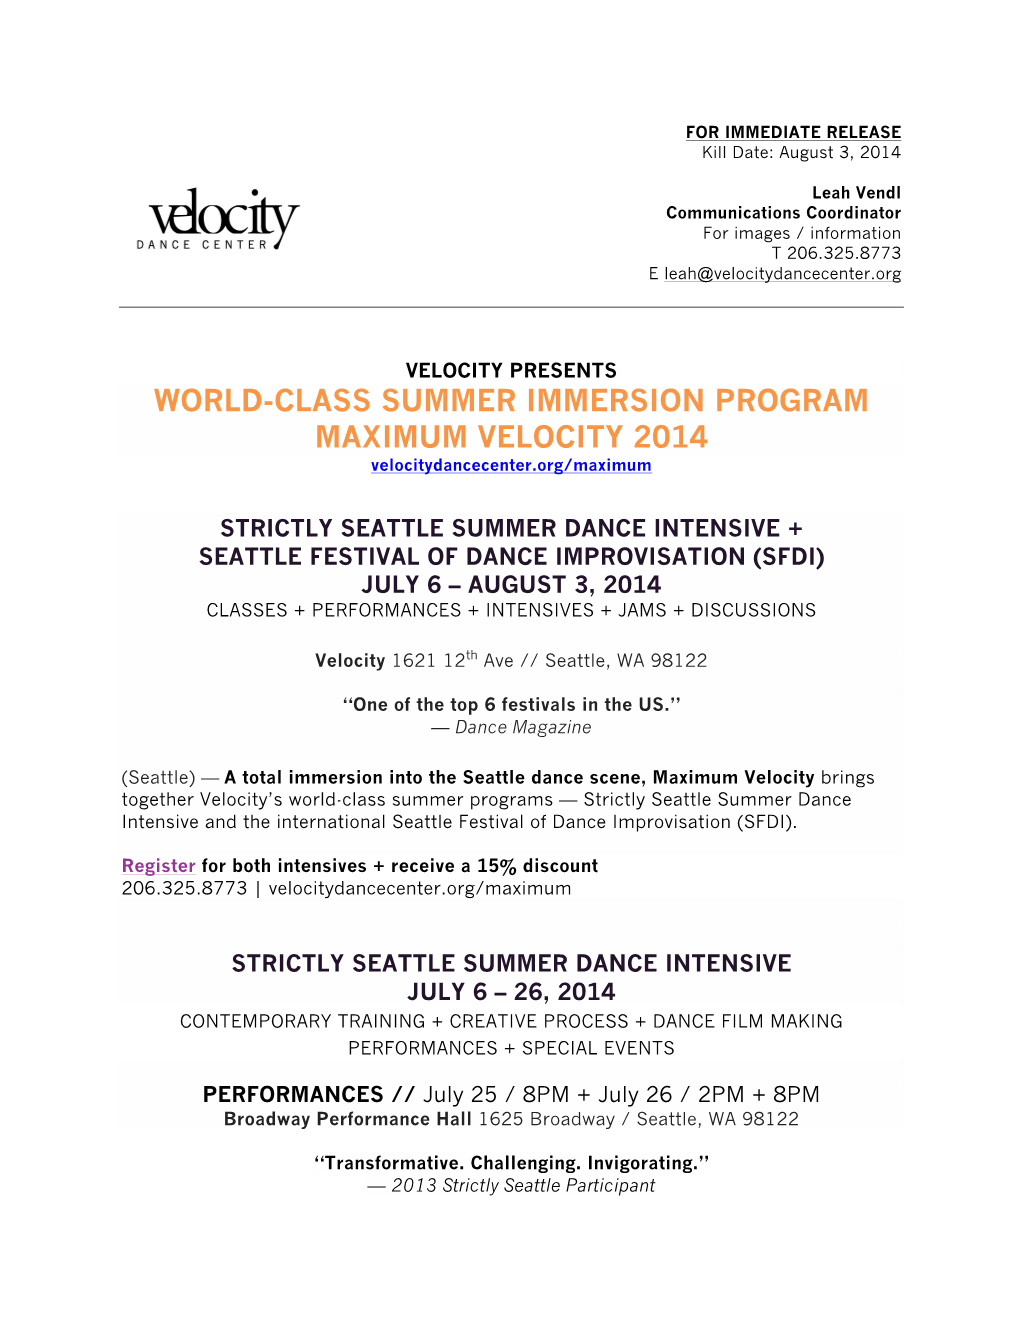 WORLD-CLASS SUMMER IMMERSION PROGRAM MAXIMUM VELOCITY 2014 Velocitydancecenter.Org/Maximum